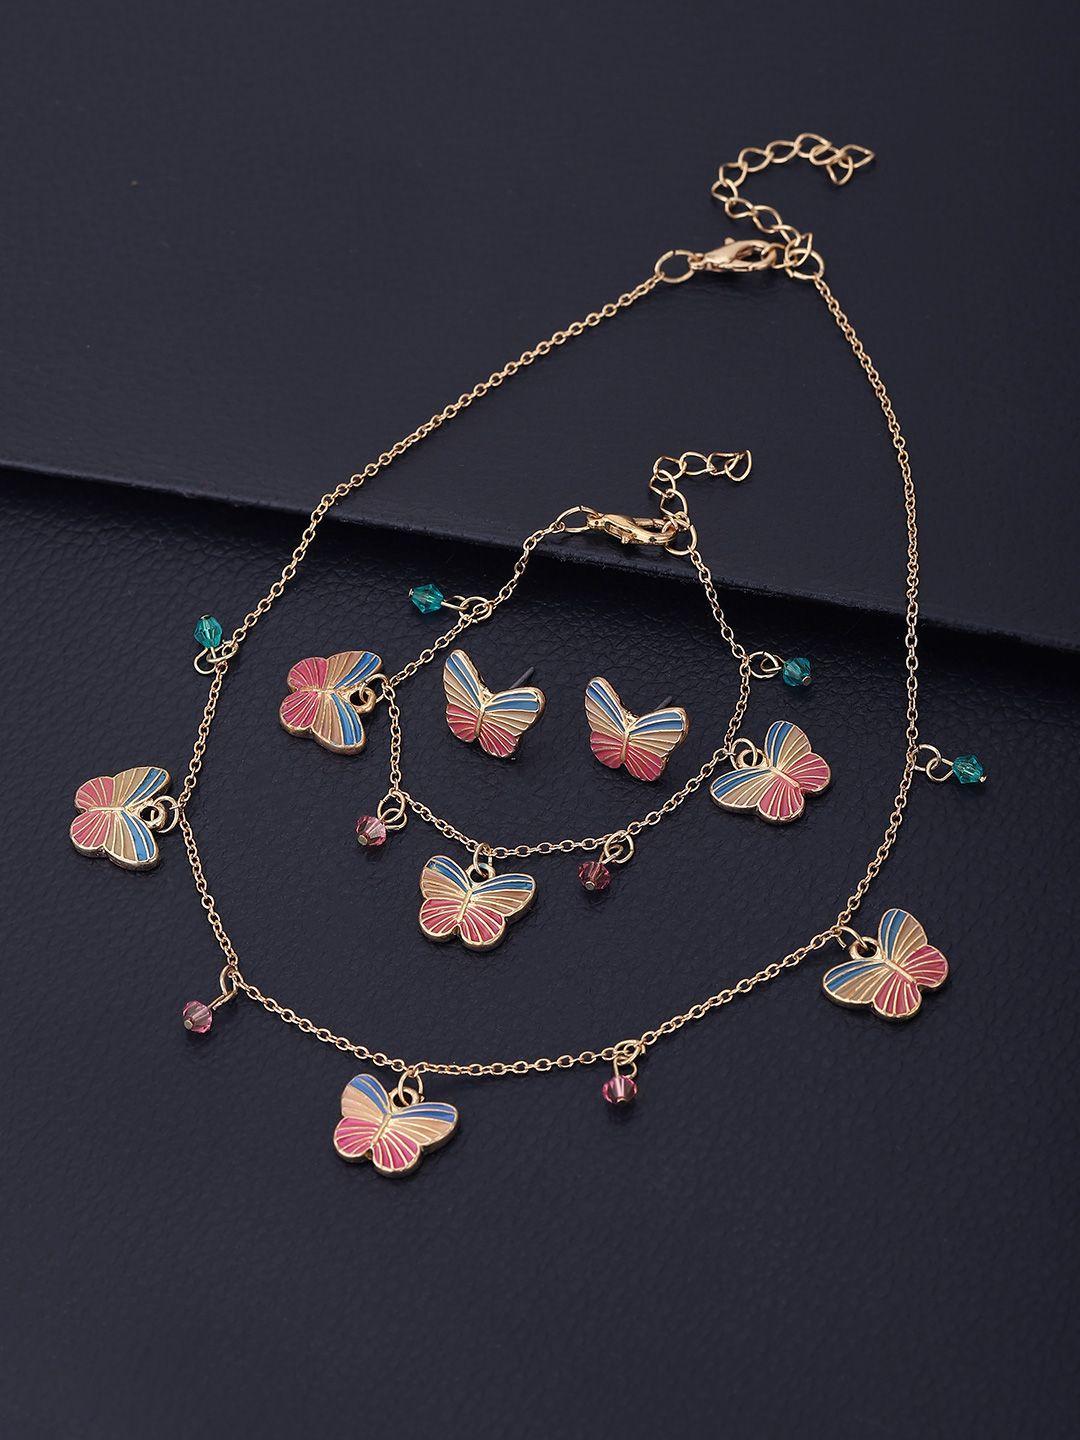 carlton london girls gold-plated pink & turquoise blue jewellery set